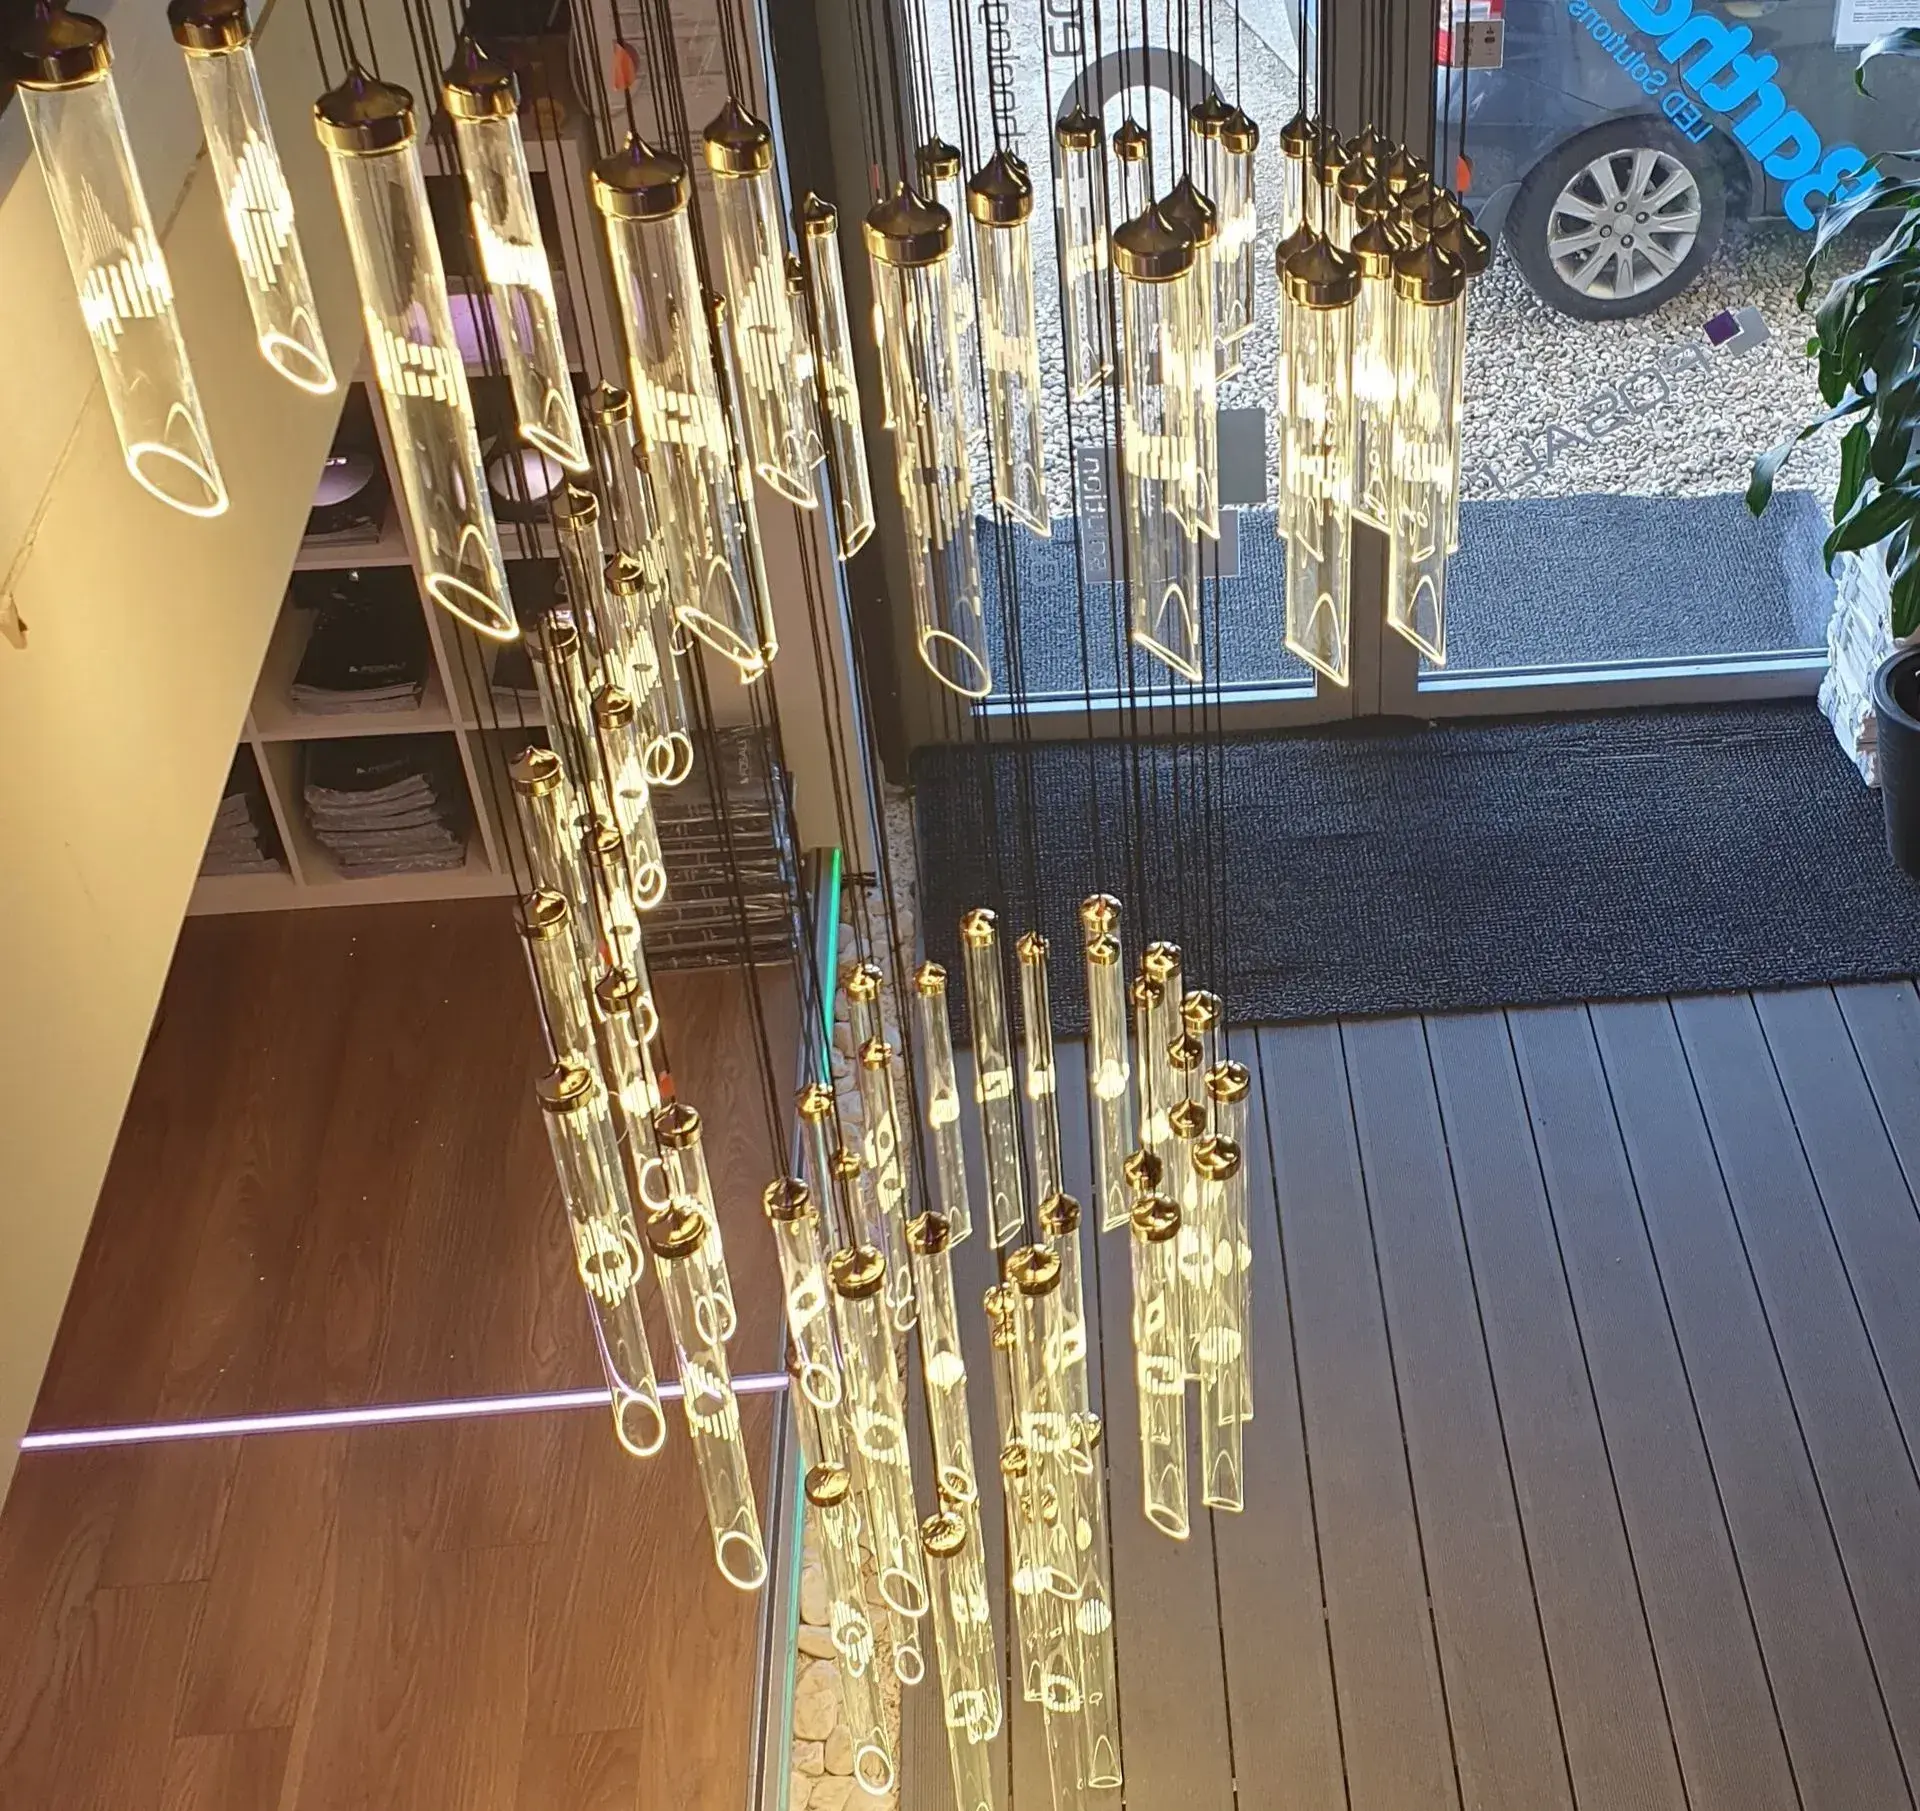 SOLINA FOSALI modern chandelier glass tube design in showroom top view